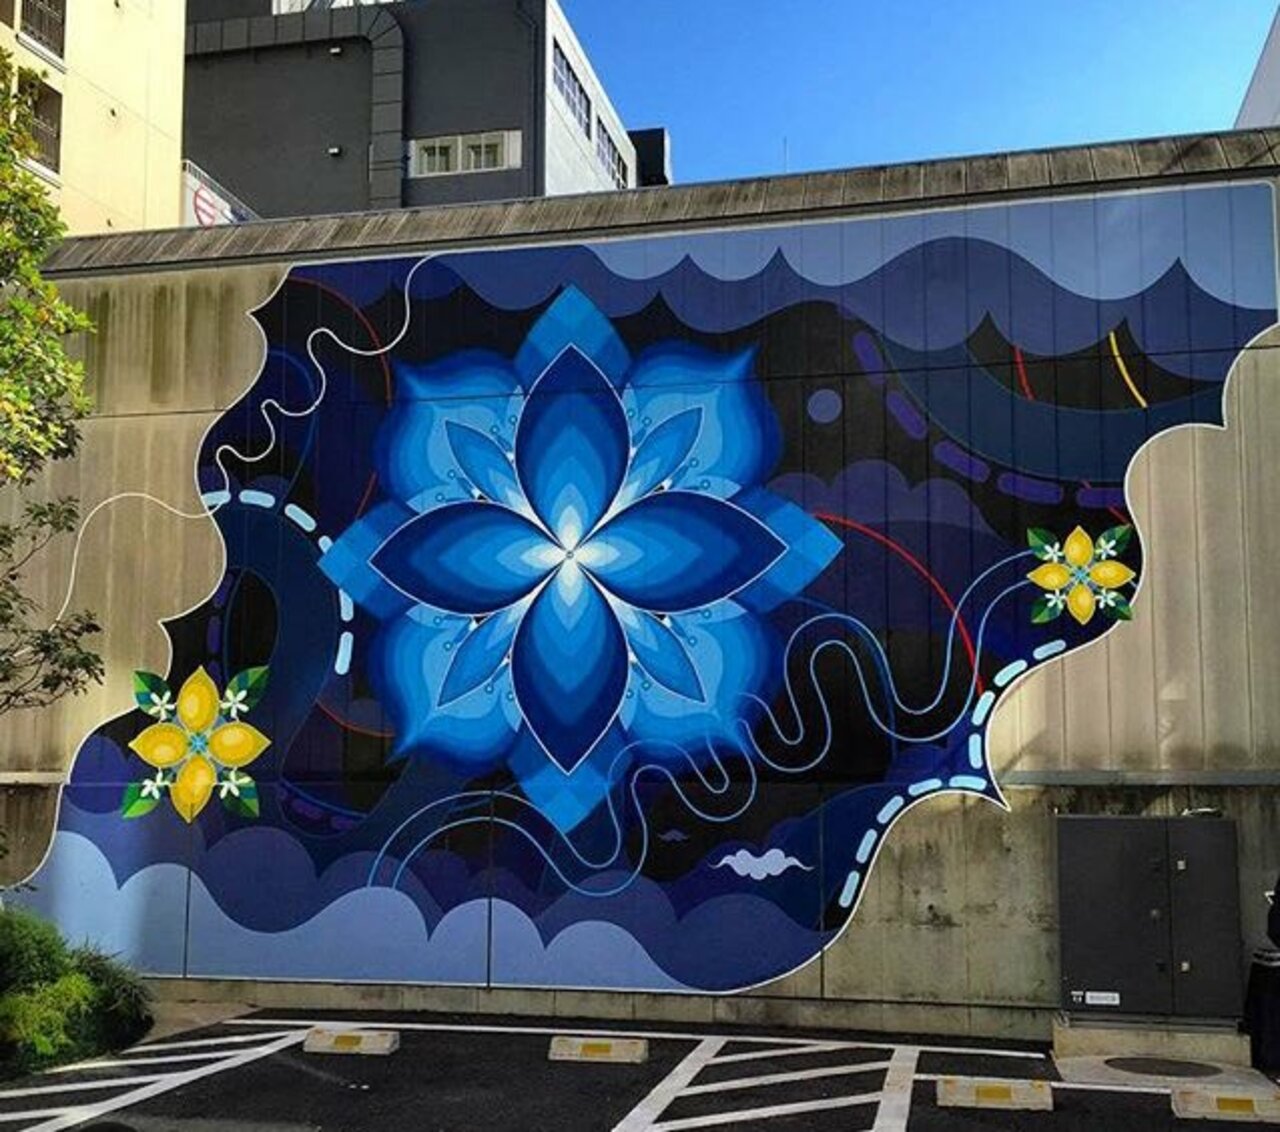 New Street Art by htzk, kami_htzk + sasu_lyri 

#art #graffiti #mural #streetart https://t.co/6Tpo8TGPhd